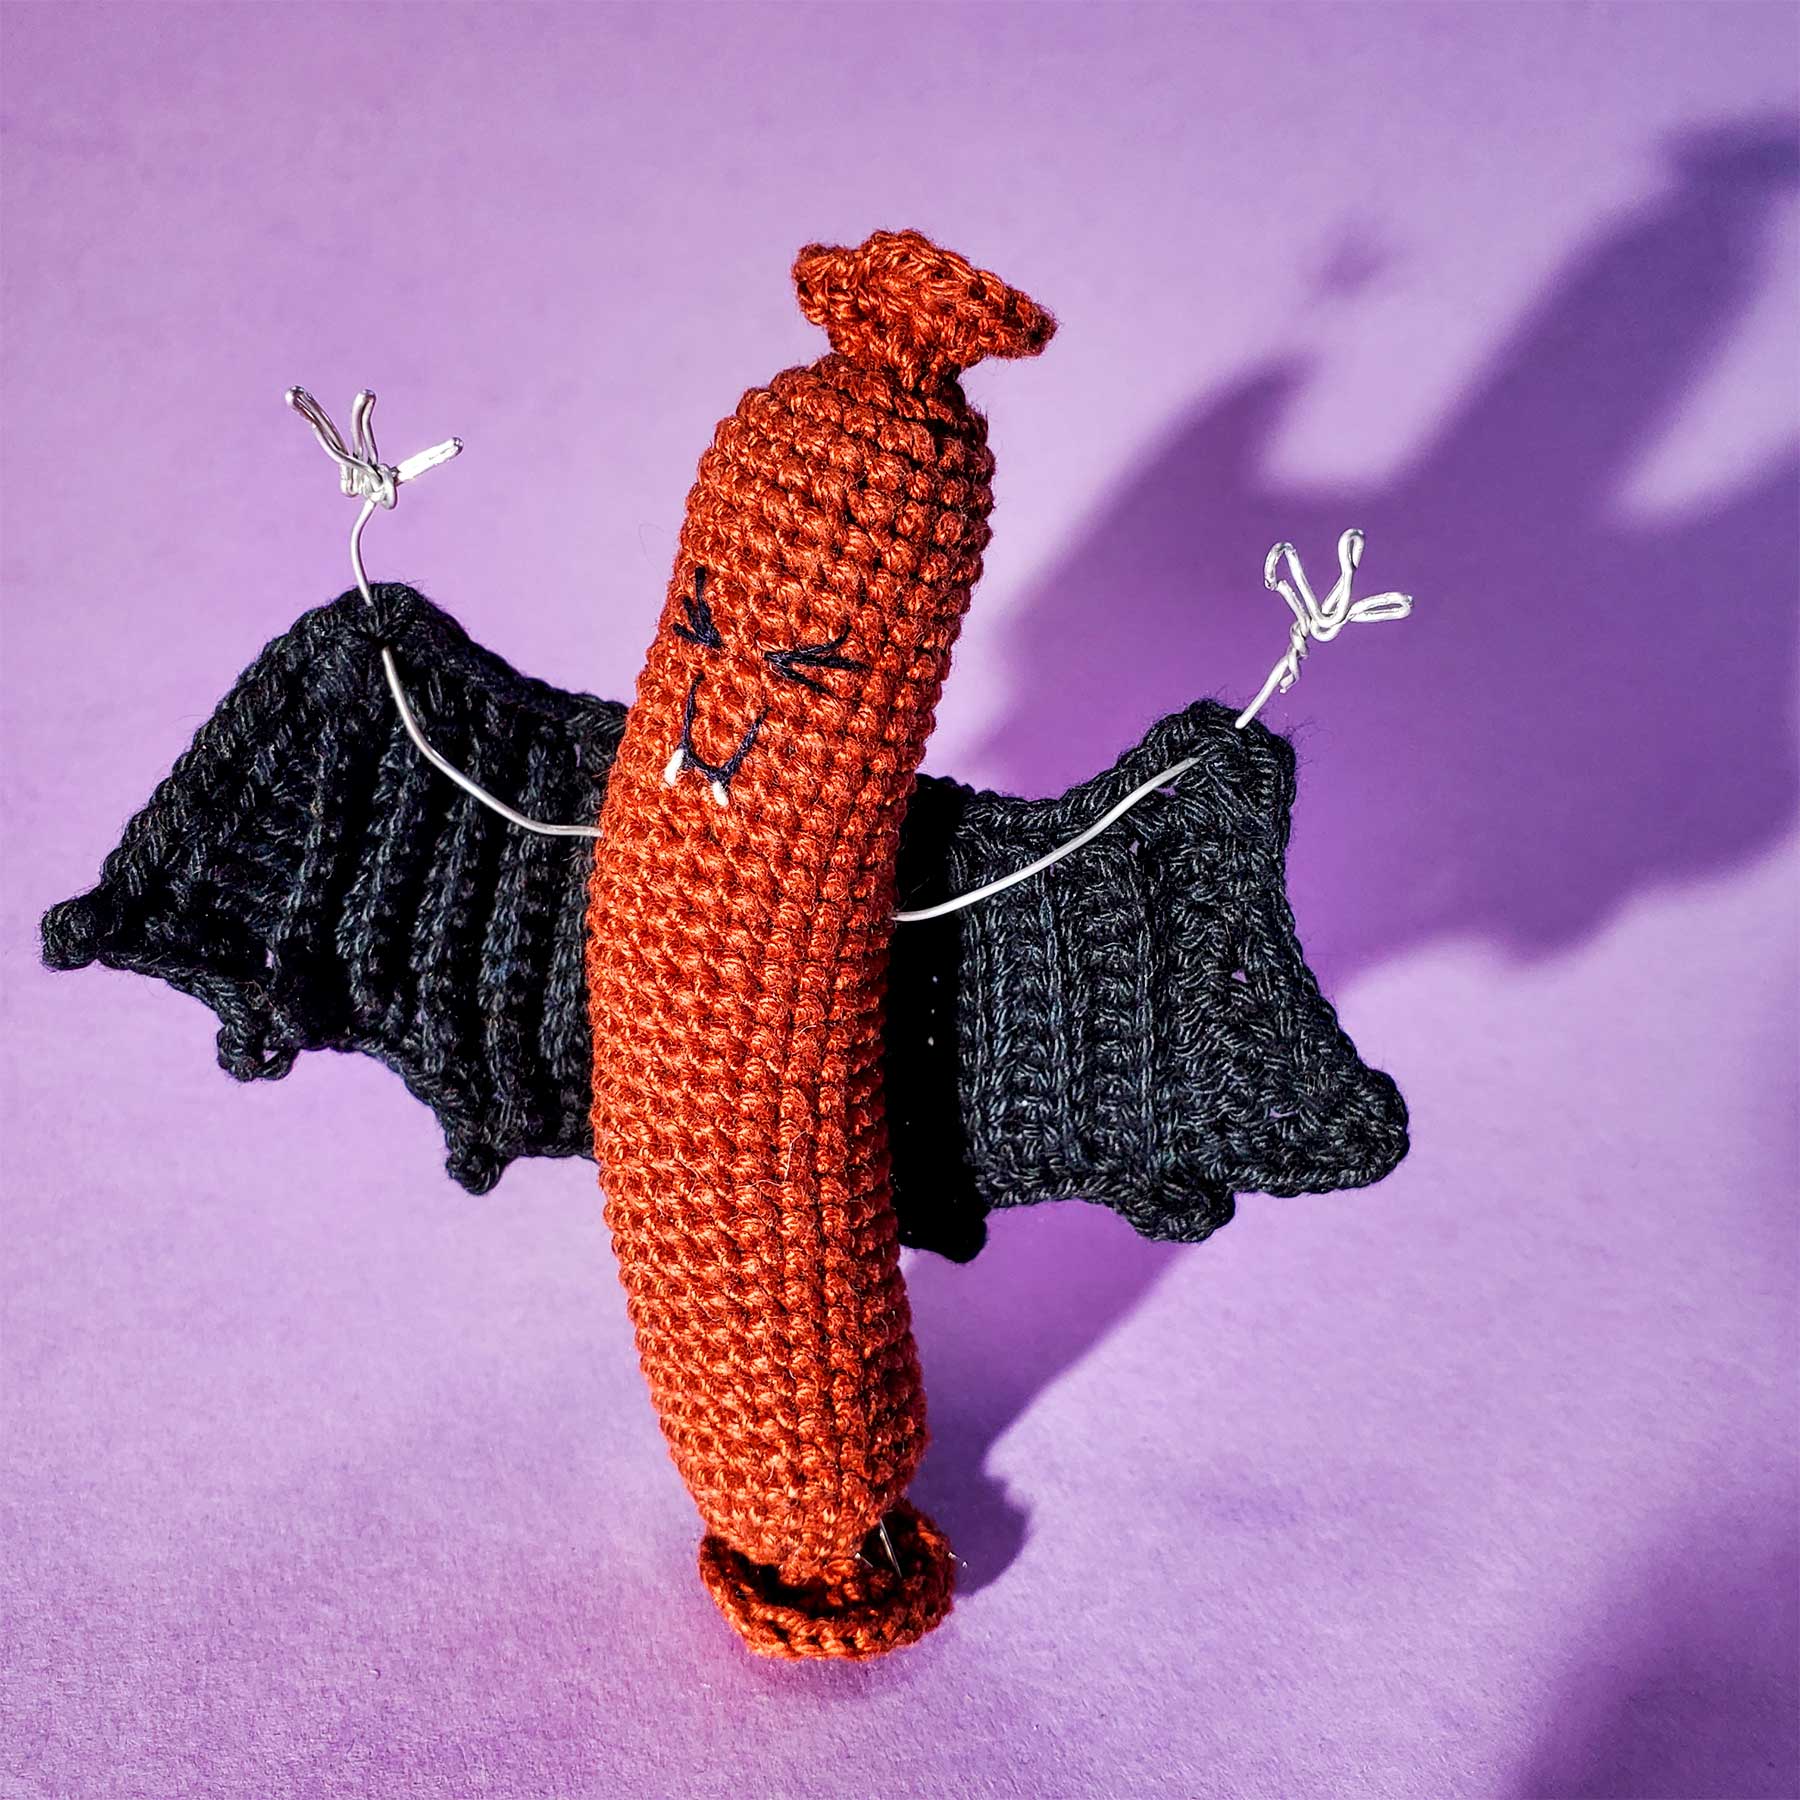 A crochet hotdog wearing a vampire cape